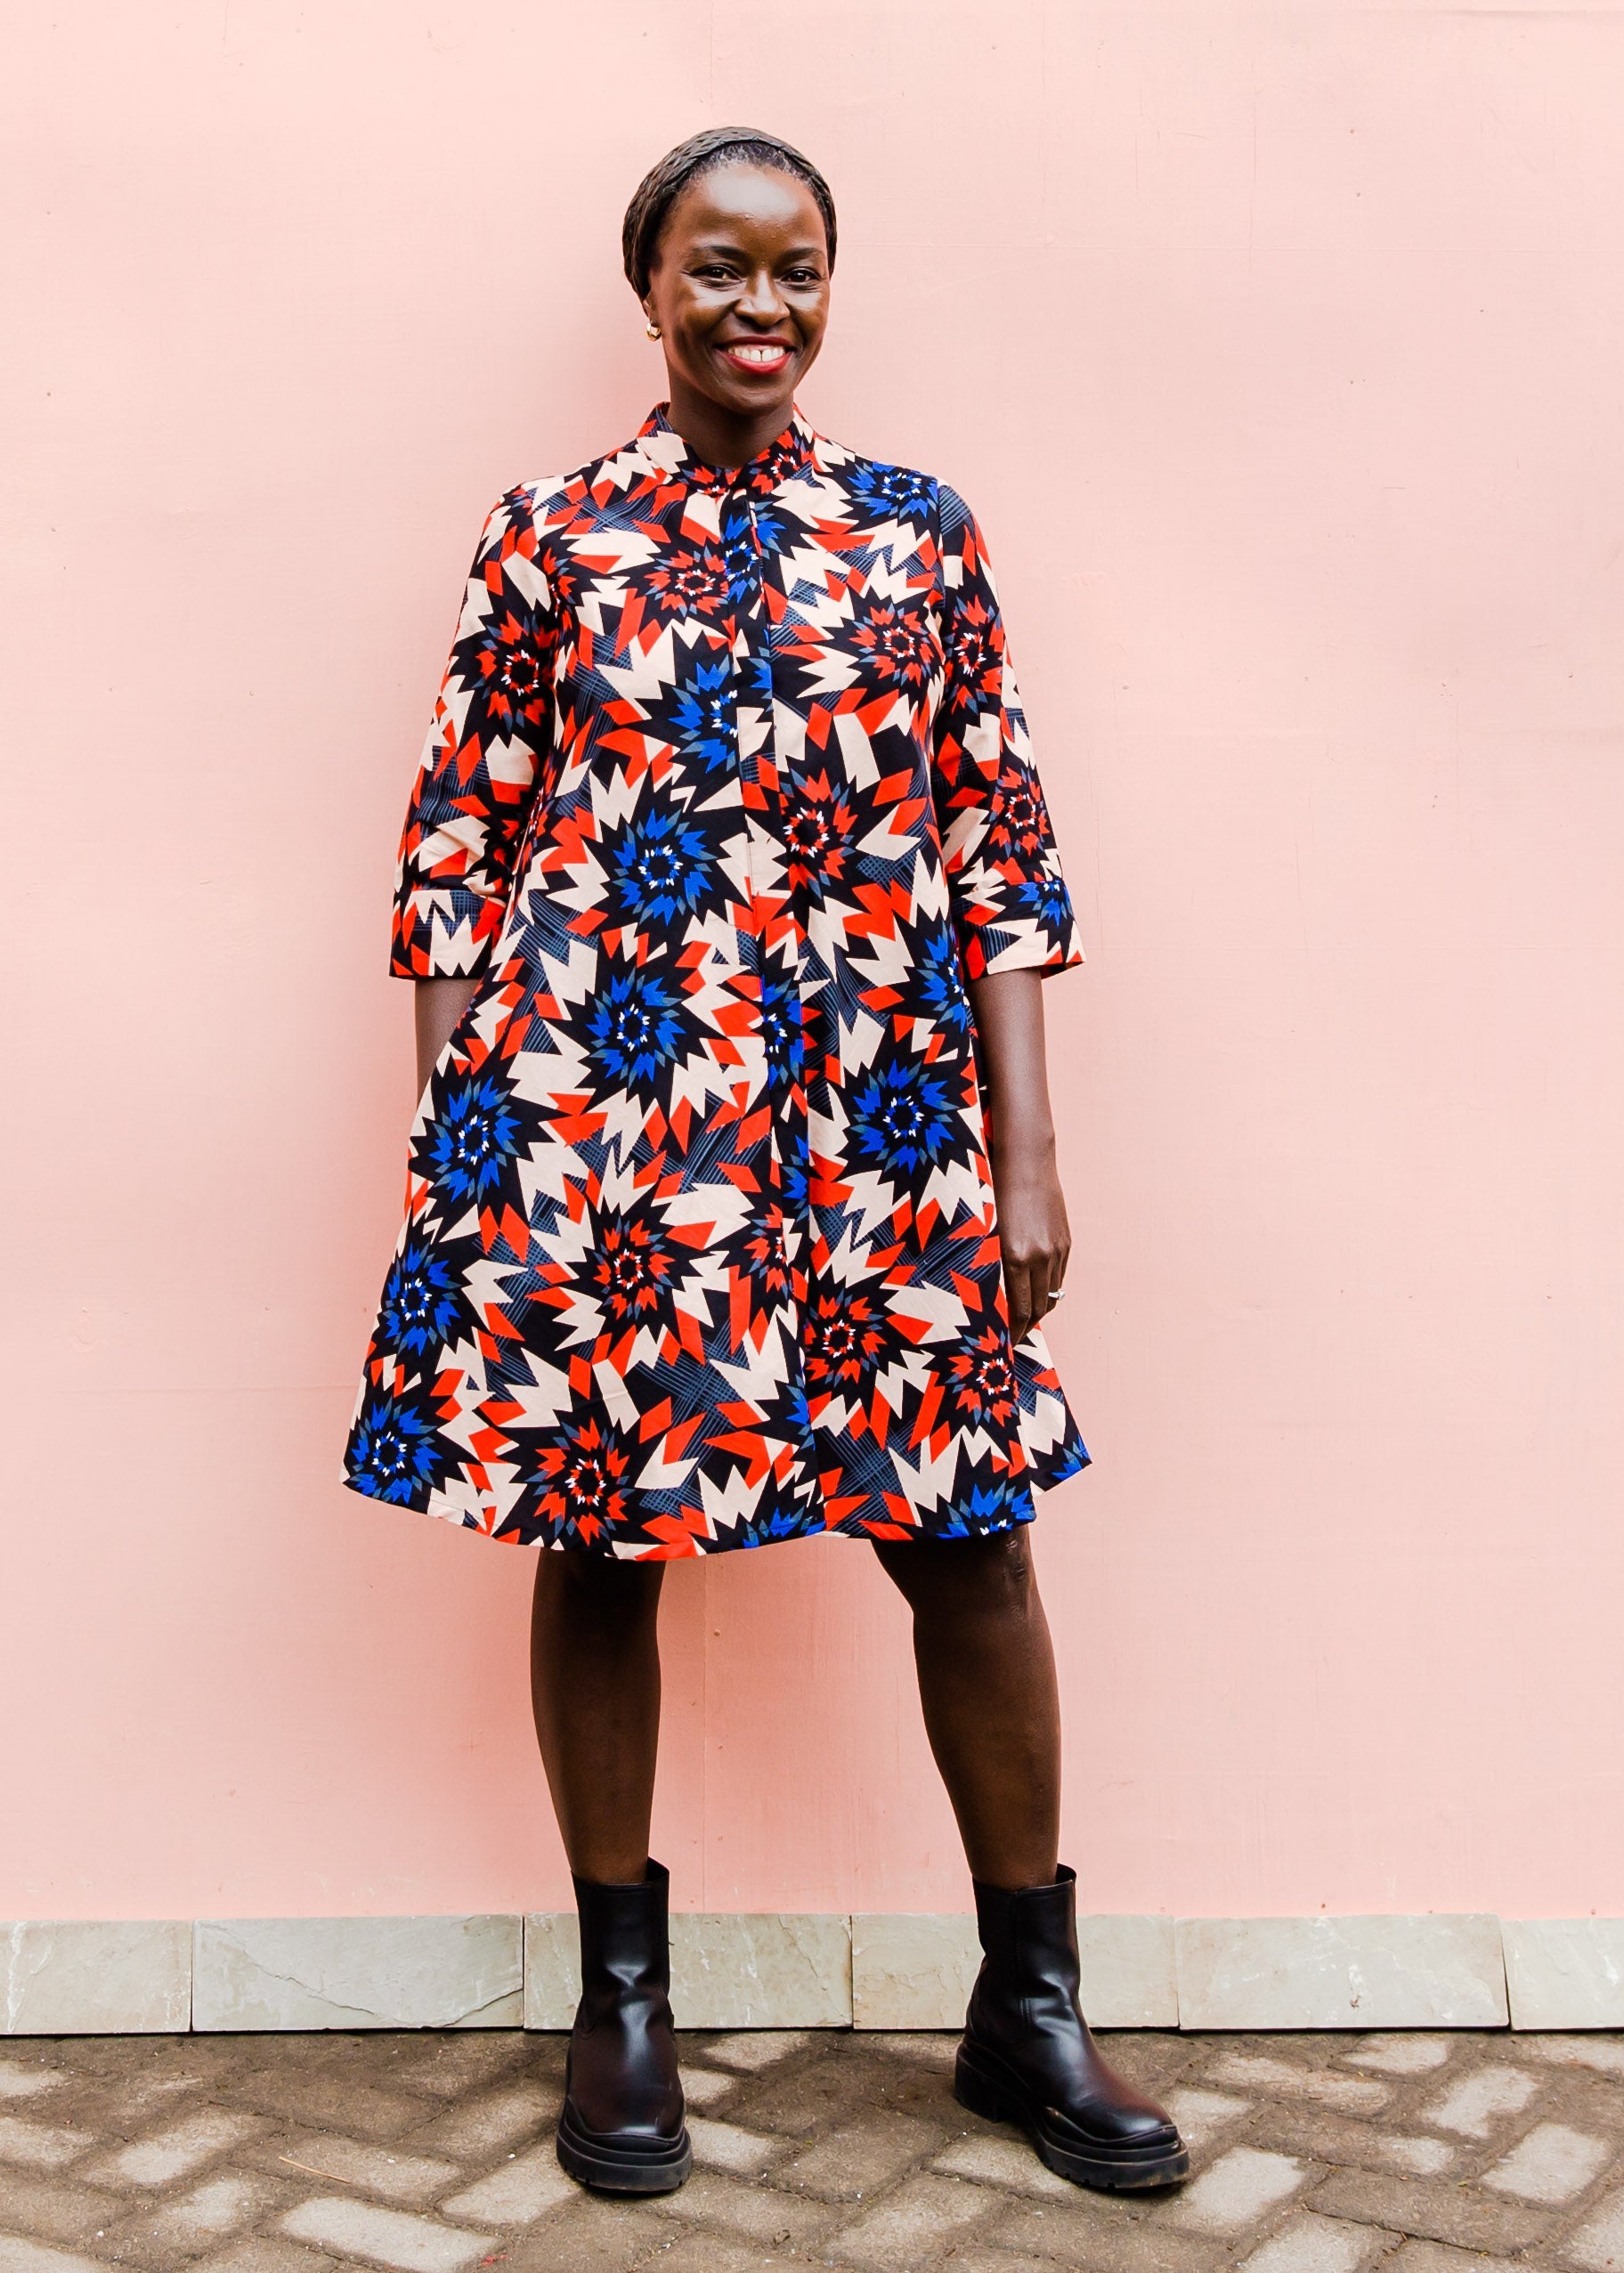 model wearing a colorful geometric shirt dress with a pinwheel design